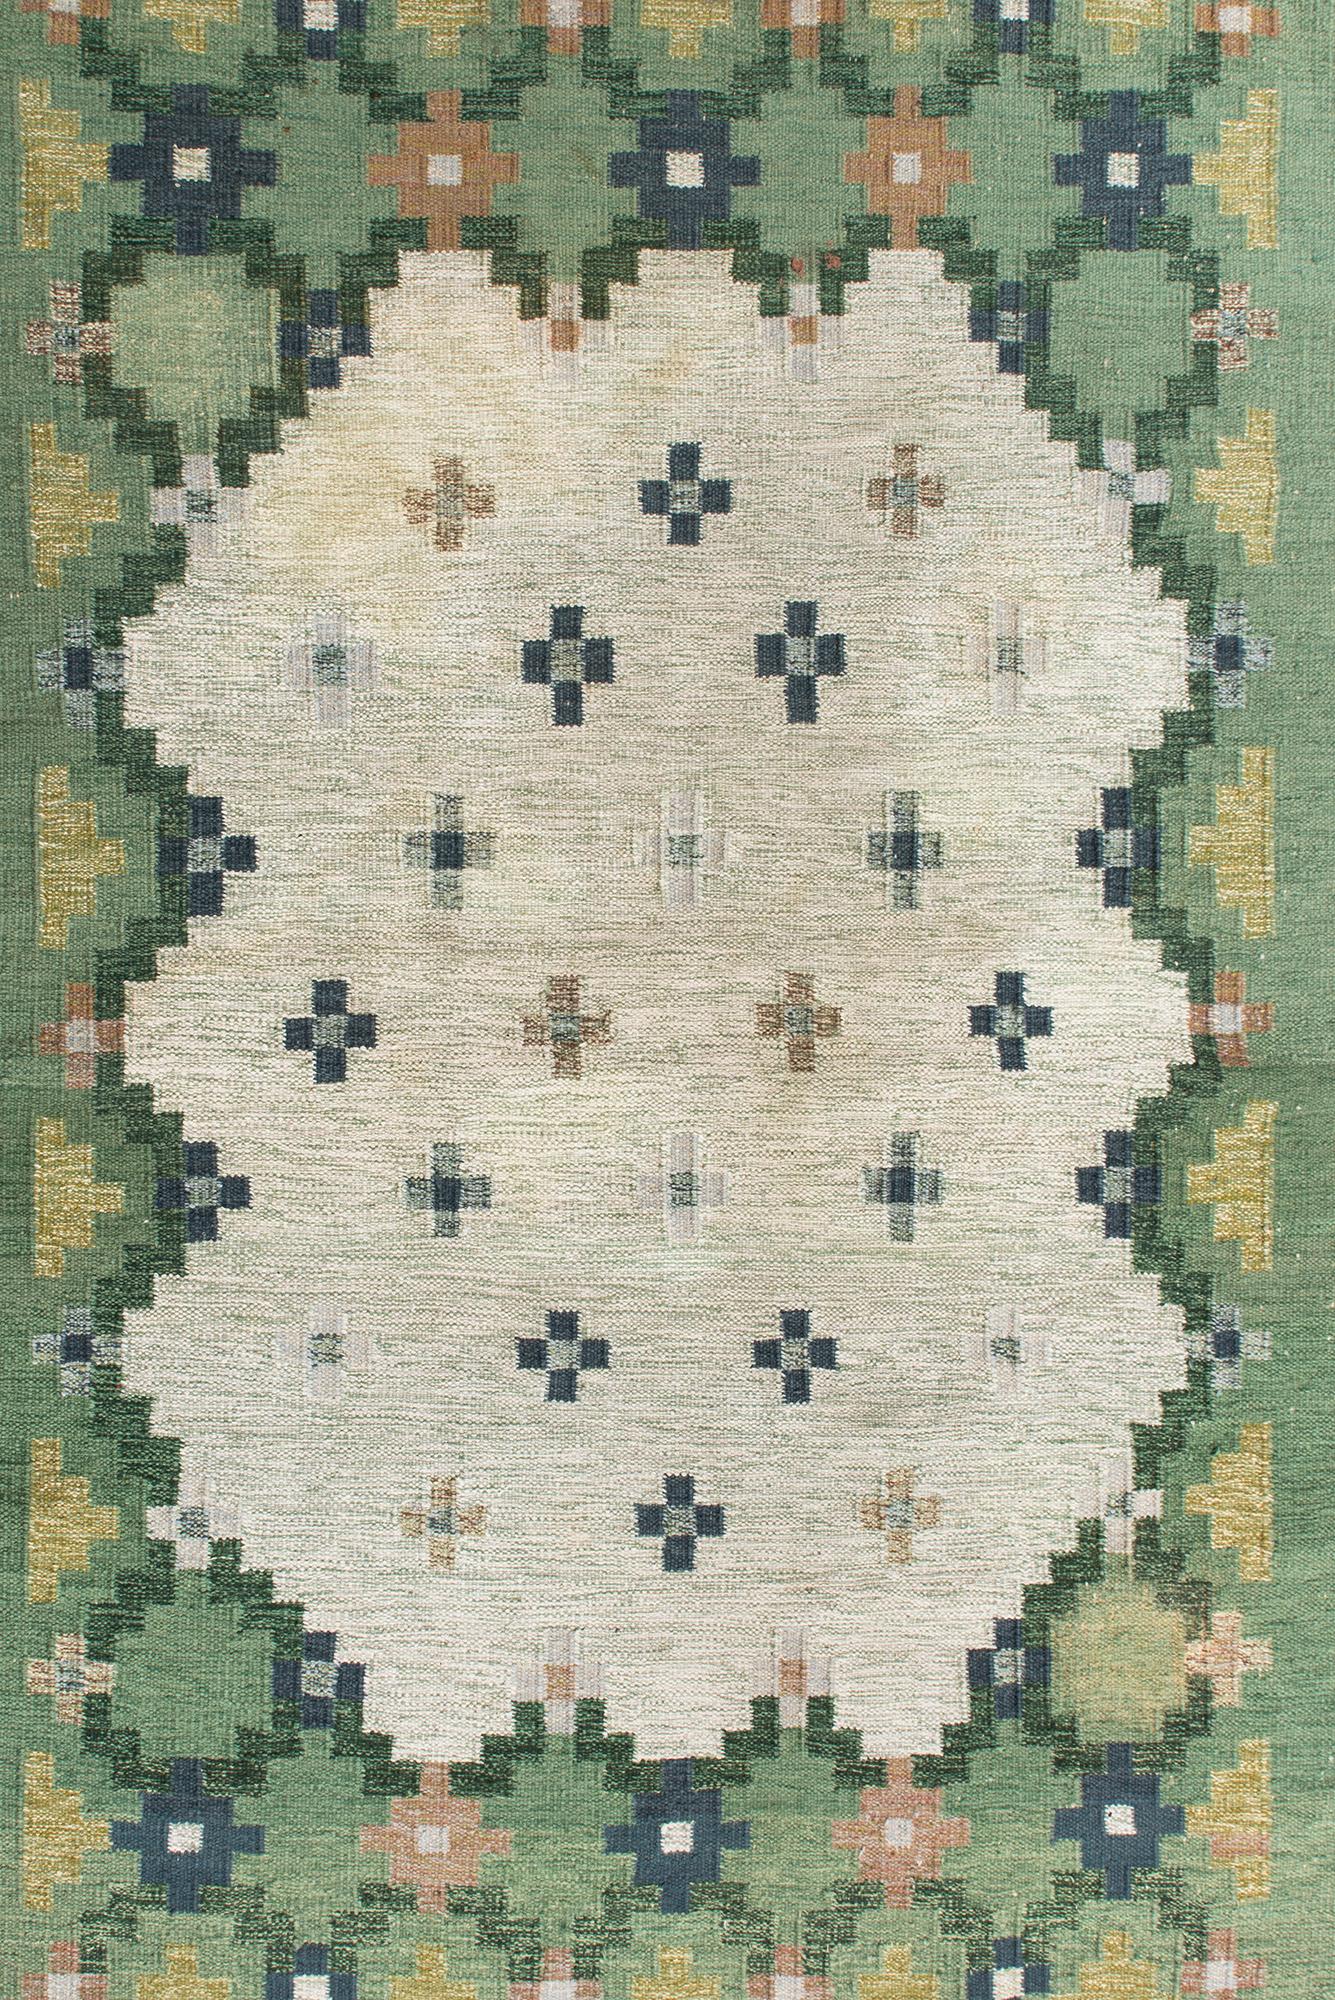 Scandinavian Modern Anne-Marie Boberg carpet produced in Sweden